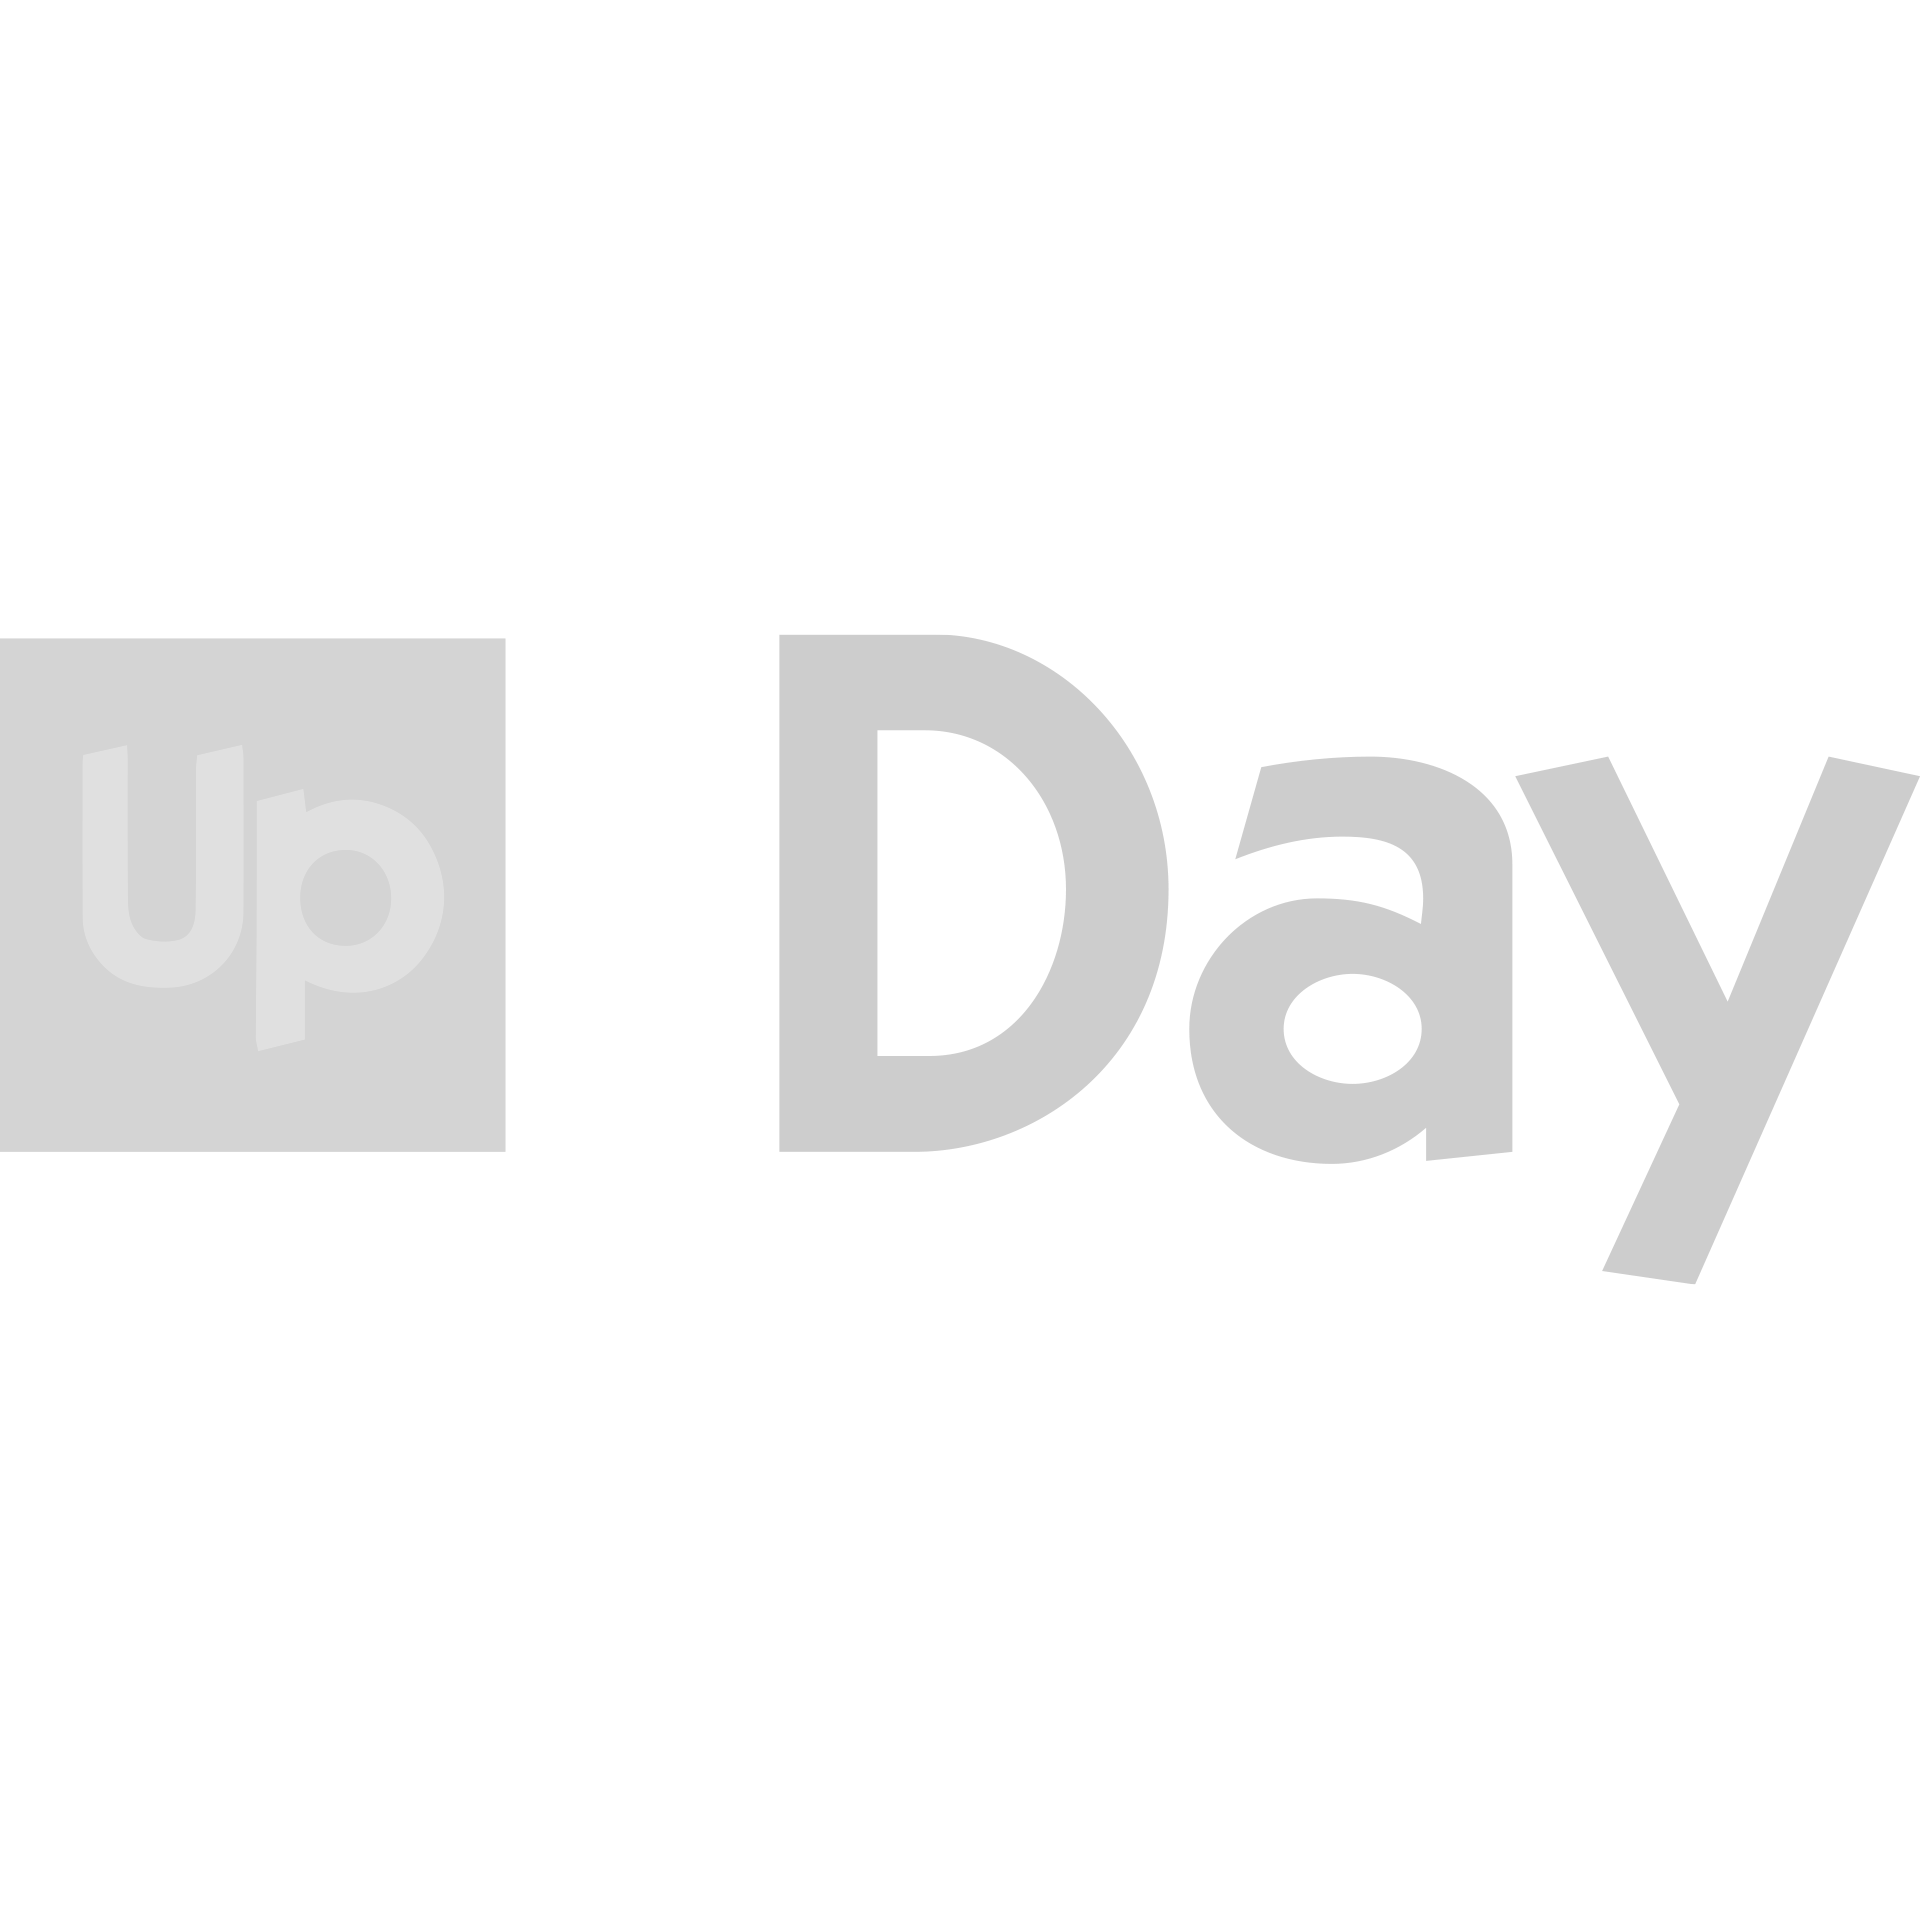 UP-Day-logo